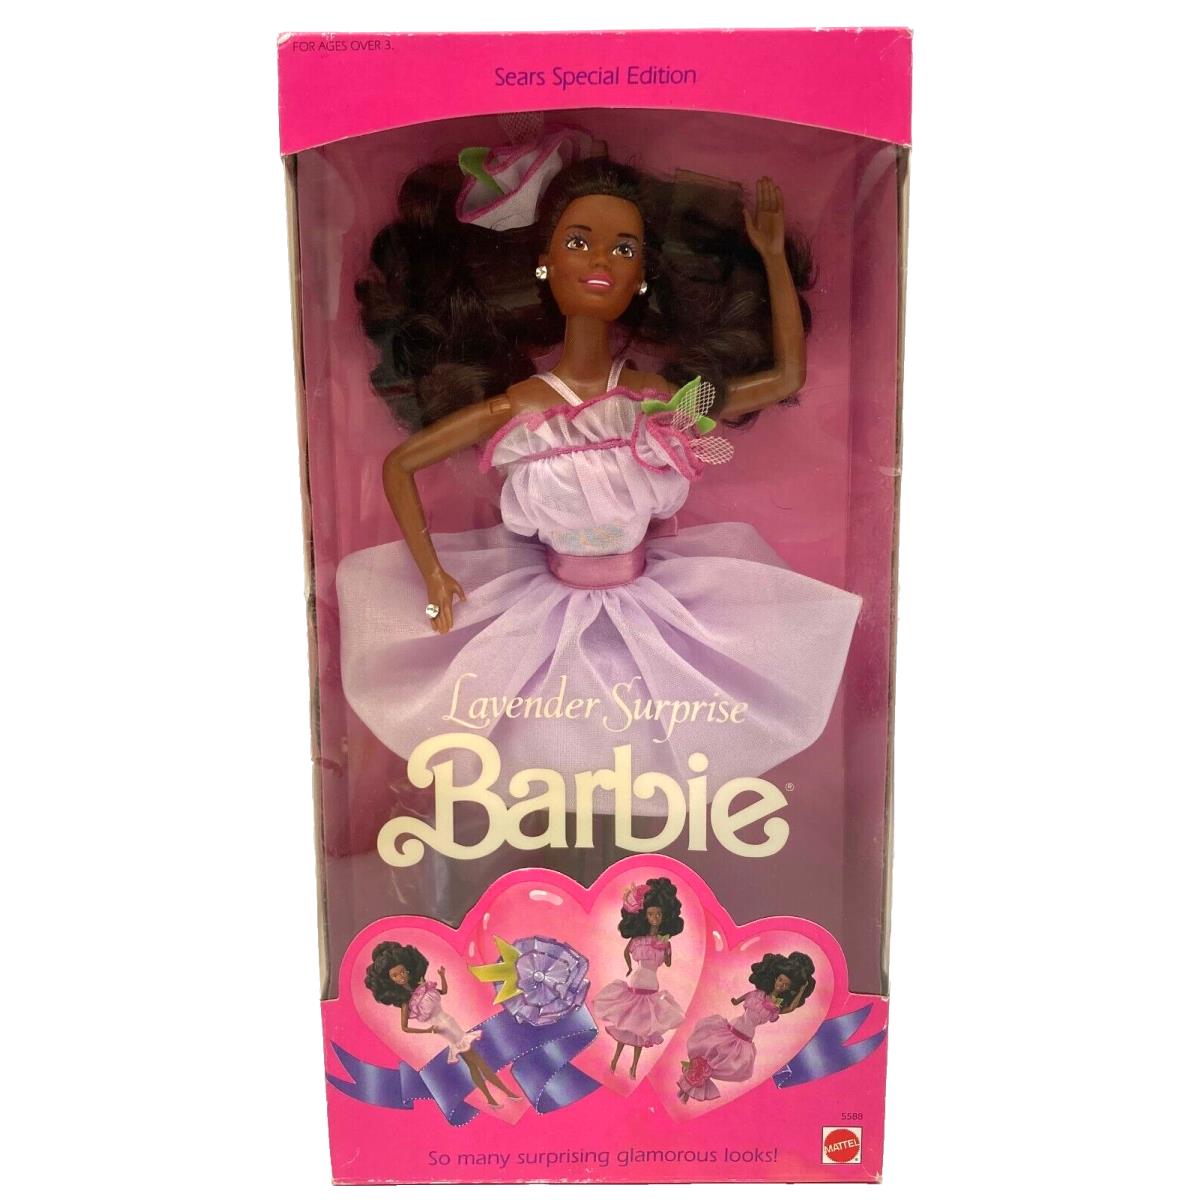 Vtg Lavender Surprise Barbie Doll 1989 Sears Special Edition Mattel 5588